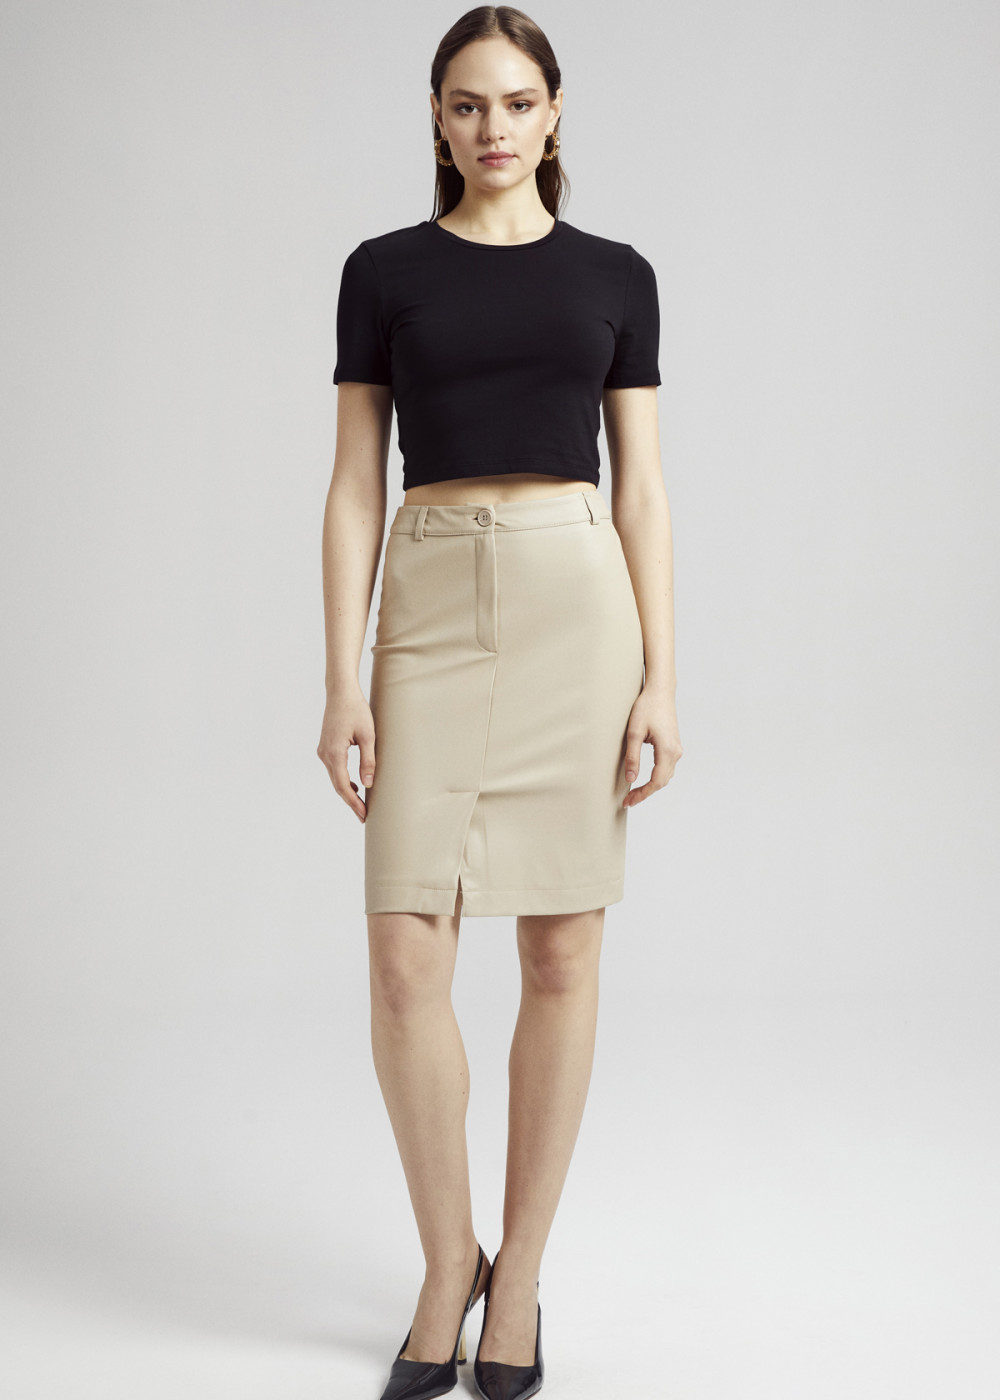 Leather Office Length Skirt